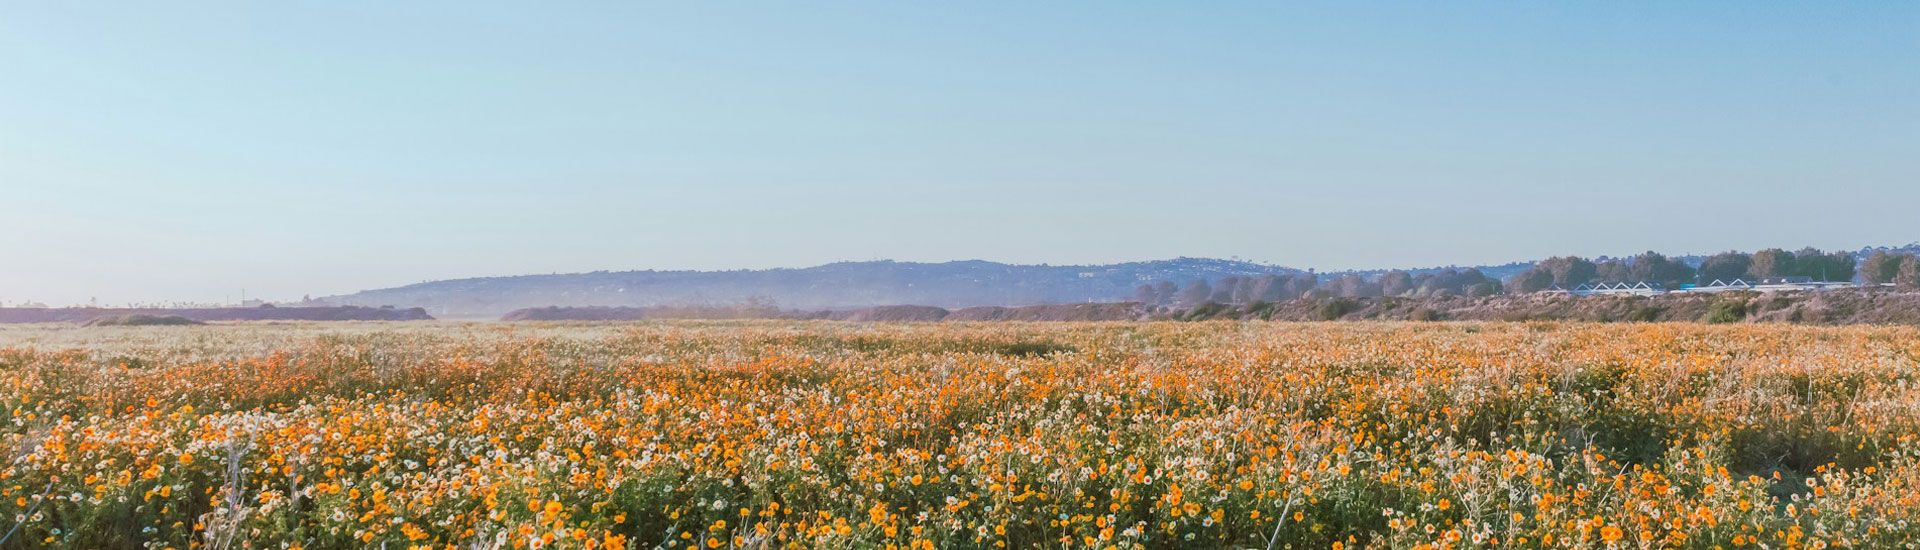 A large open field of wildflowers